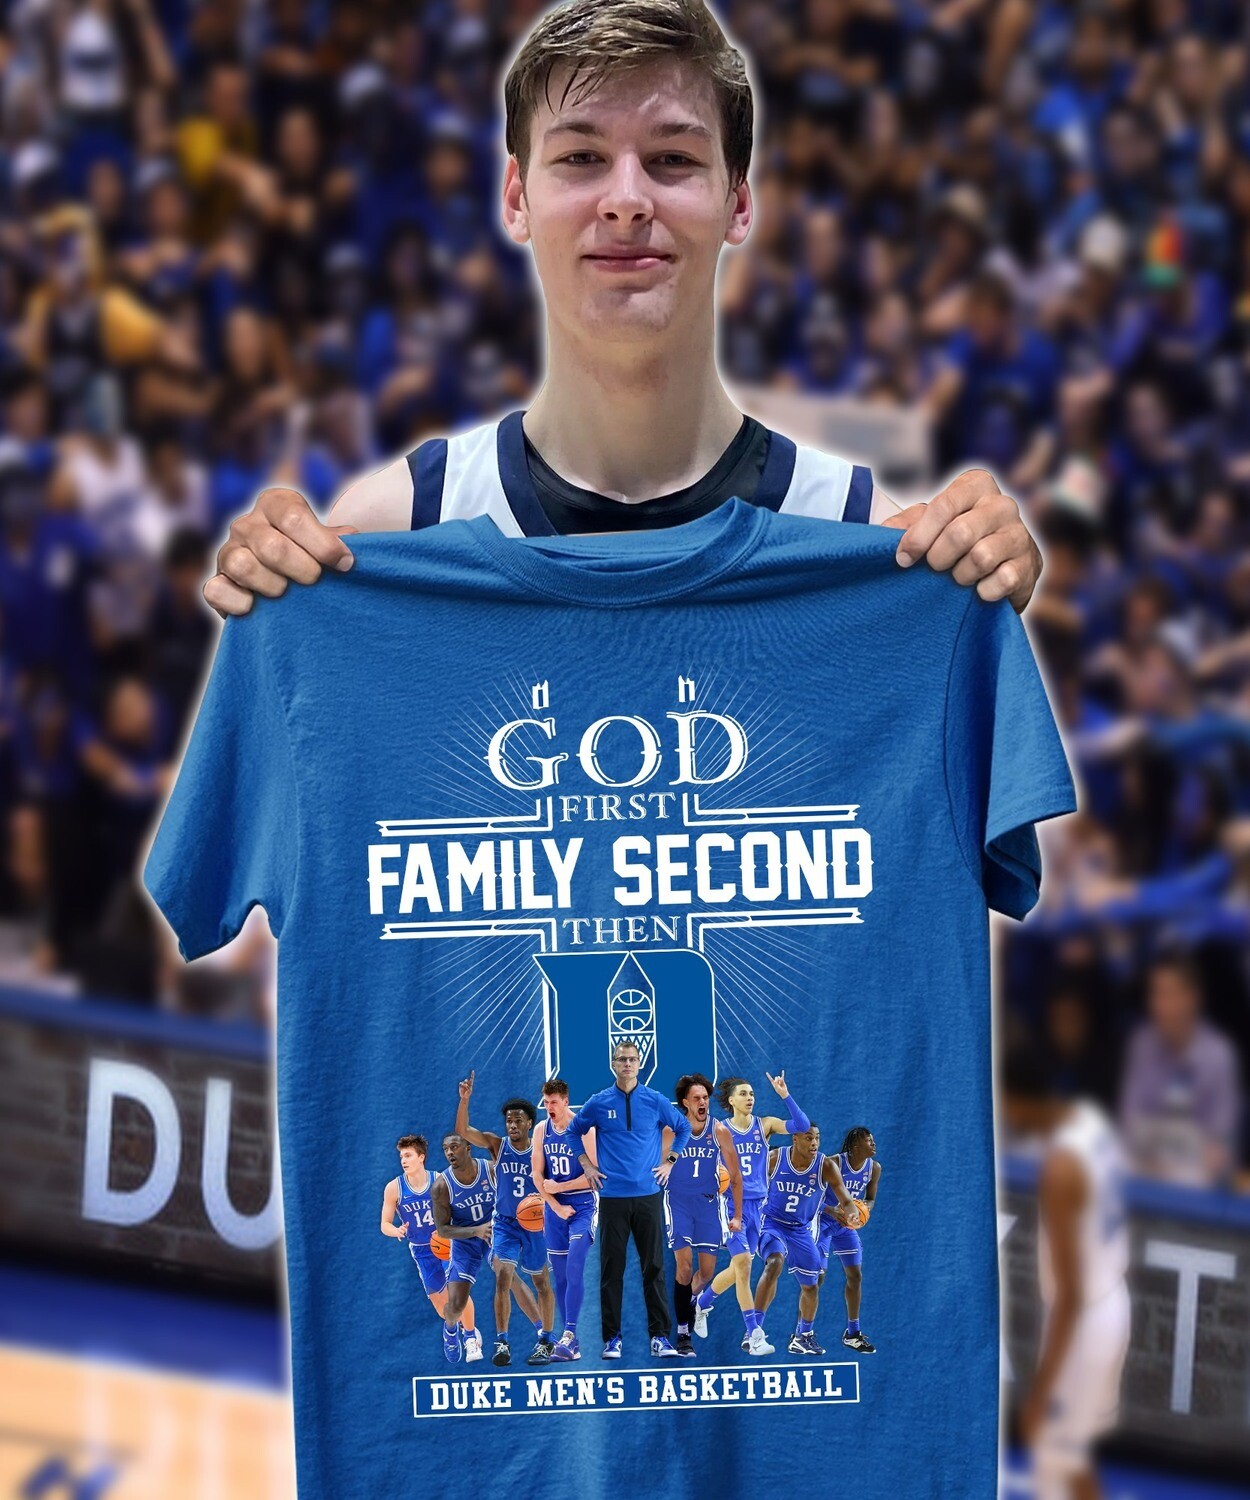 God First Family Second Then Duke Men’s Basketball Shirt